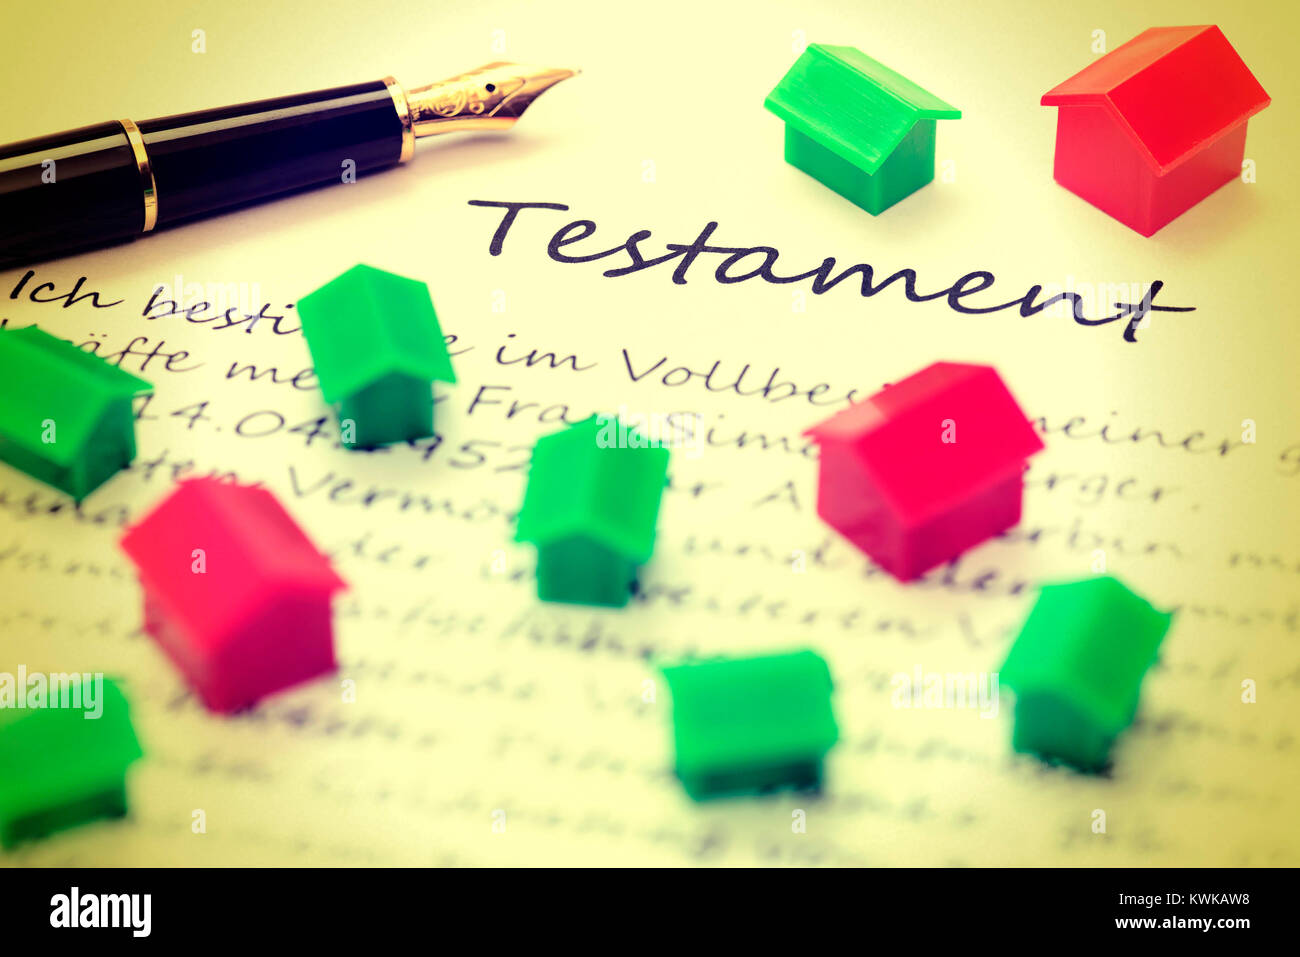 Testament and miniature houses, inheritance tax, Testament und Miniaturh?user, Erbschaftsteuer Stock Photo